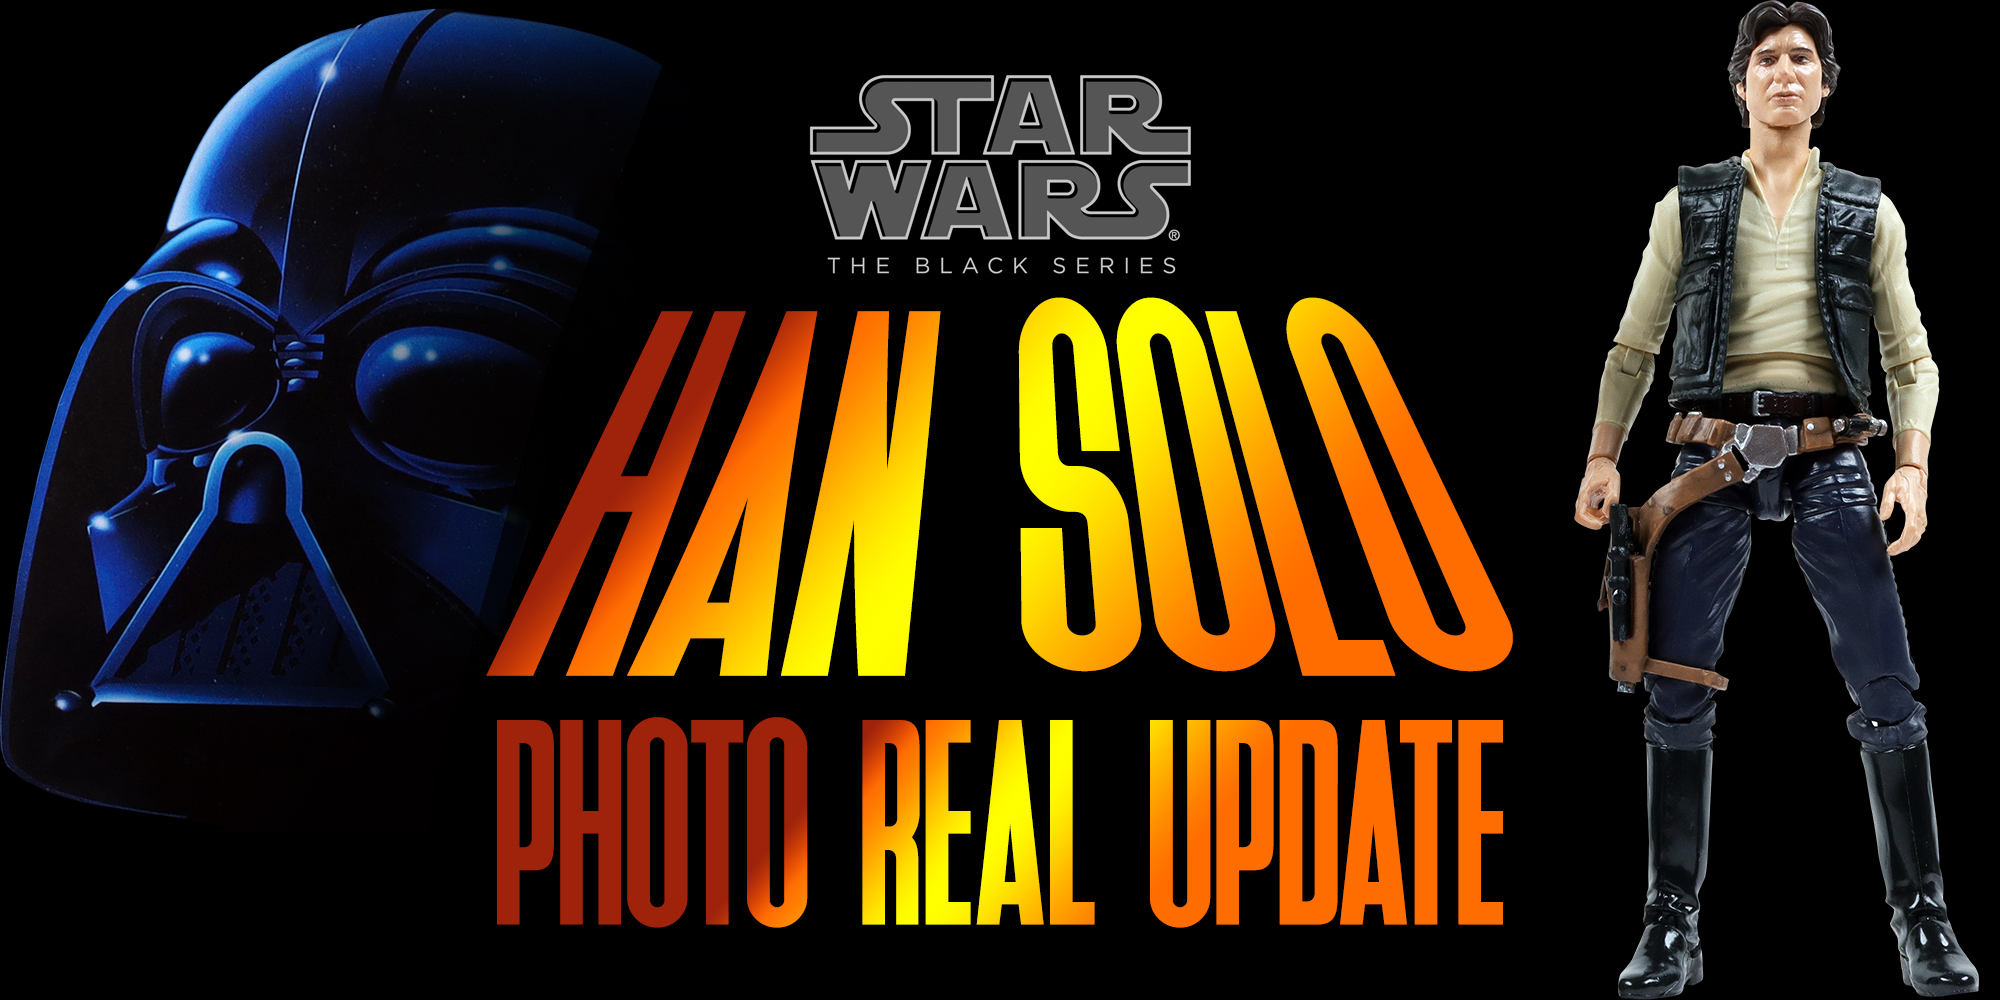 Black Series Han Solo Added